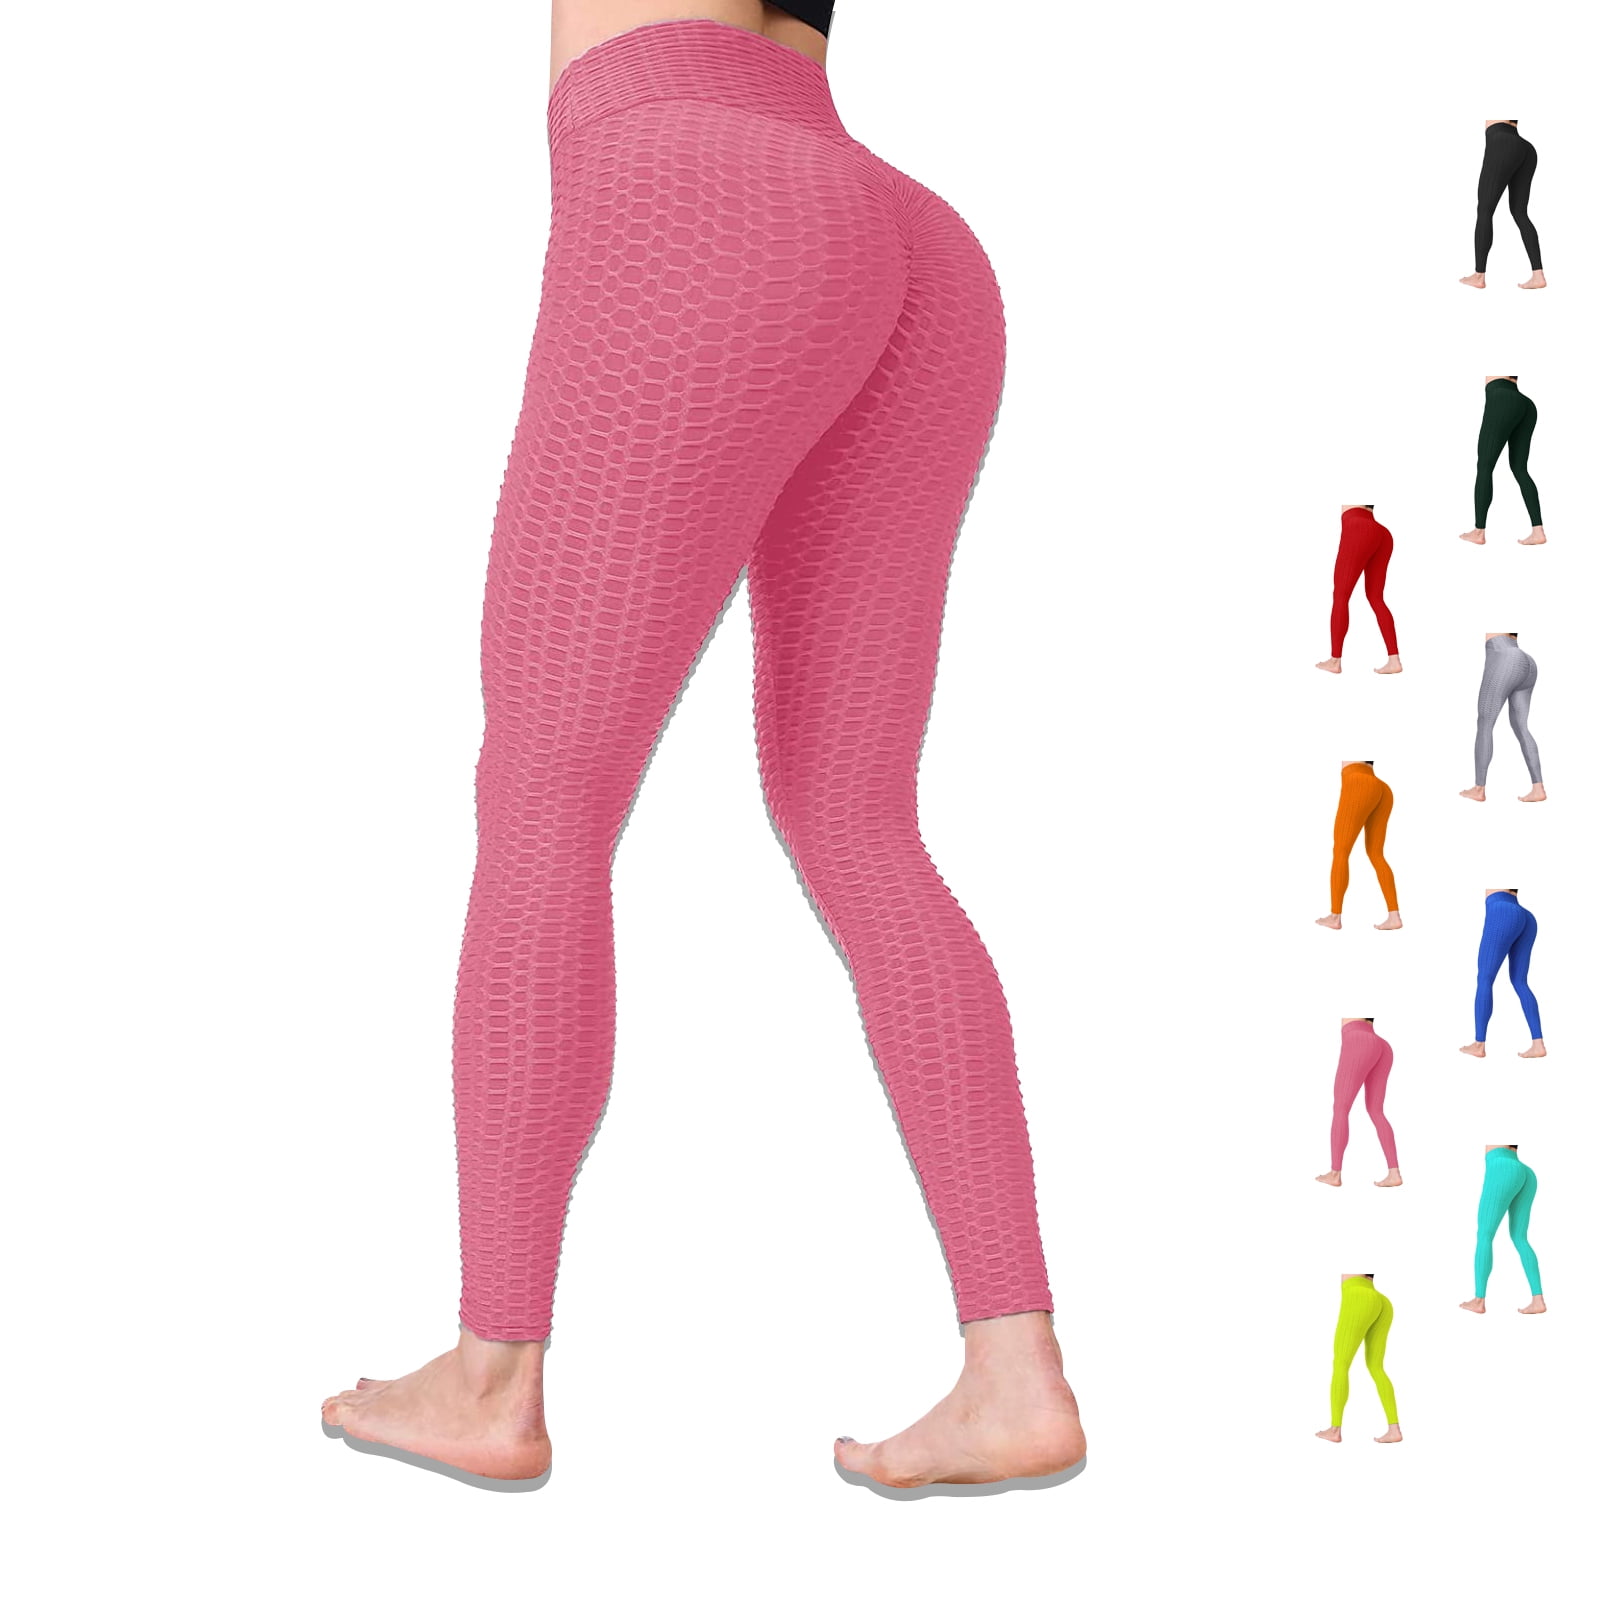 These TikTok #leggings tho 😒😂 #fail #laugh #hulahoop #yogapants